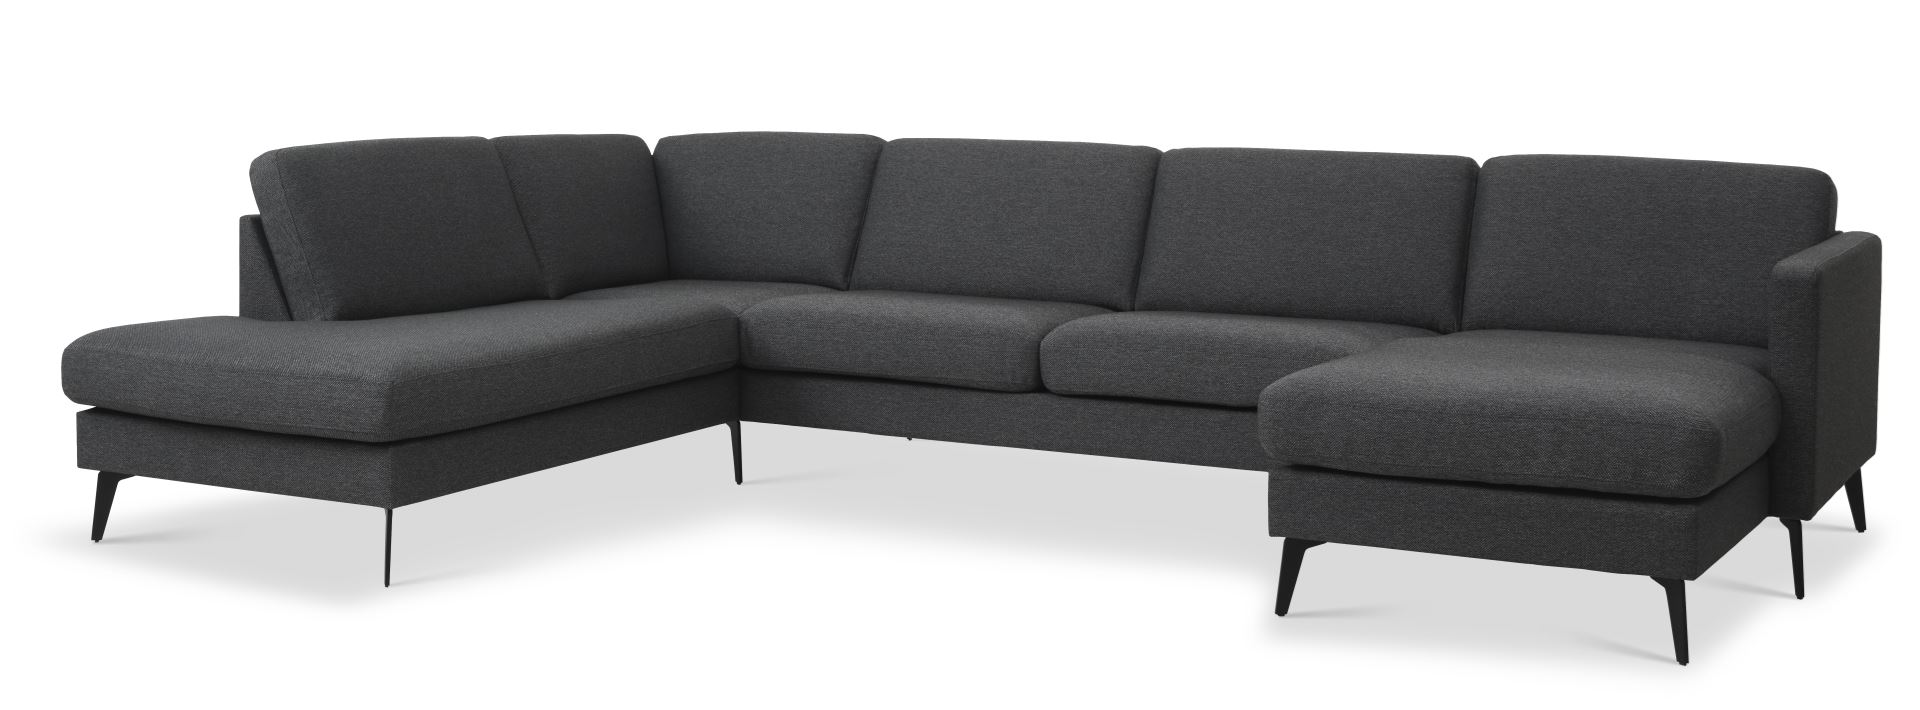 Ask sæt 54 U OE sofa, m. venstre chaiselong - antracitgrå polyester stof og Eiffel ben